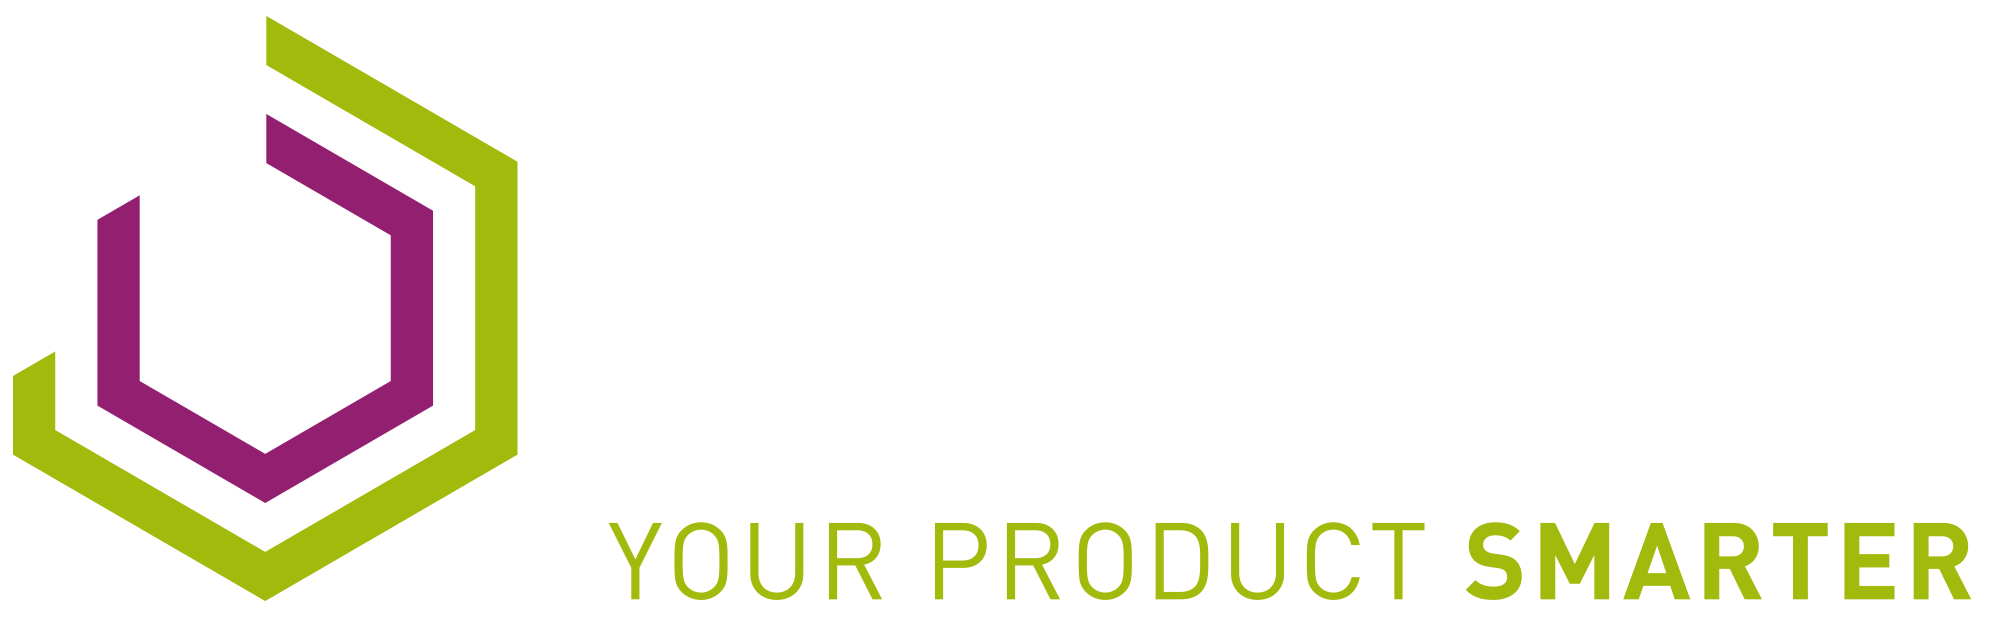 Baulds - Your Product Smarter